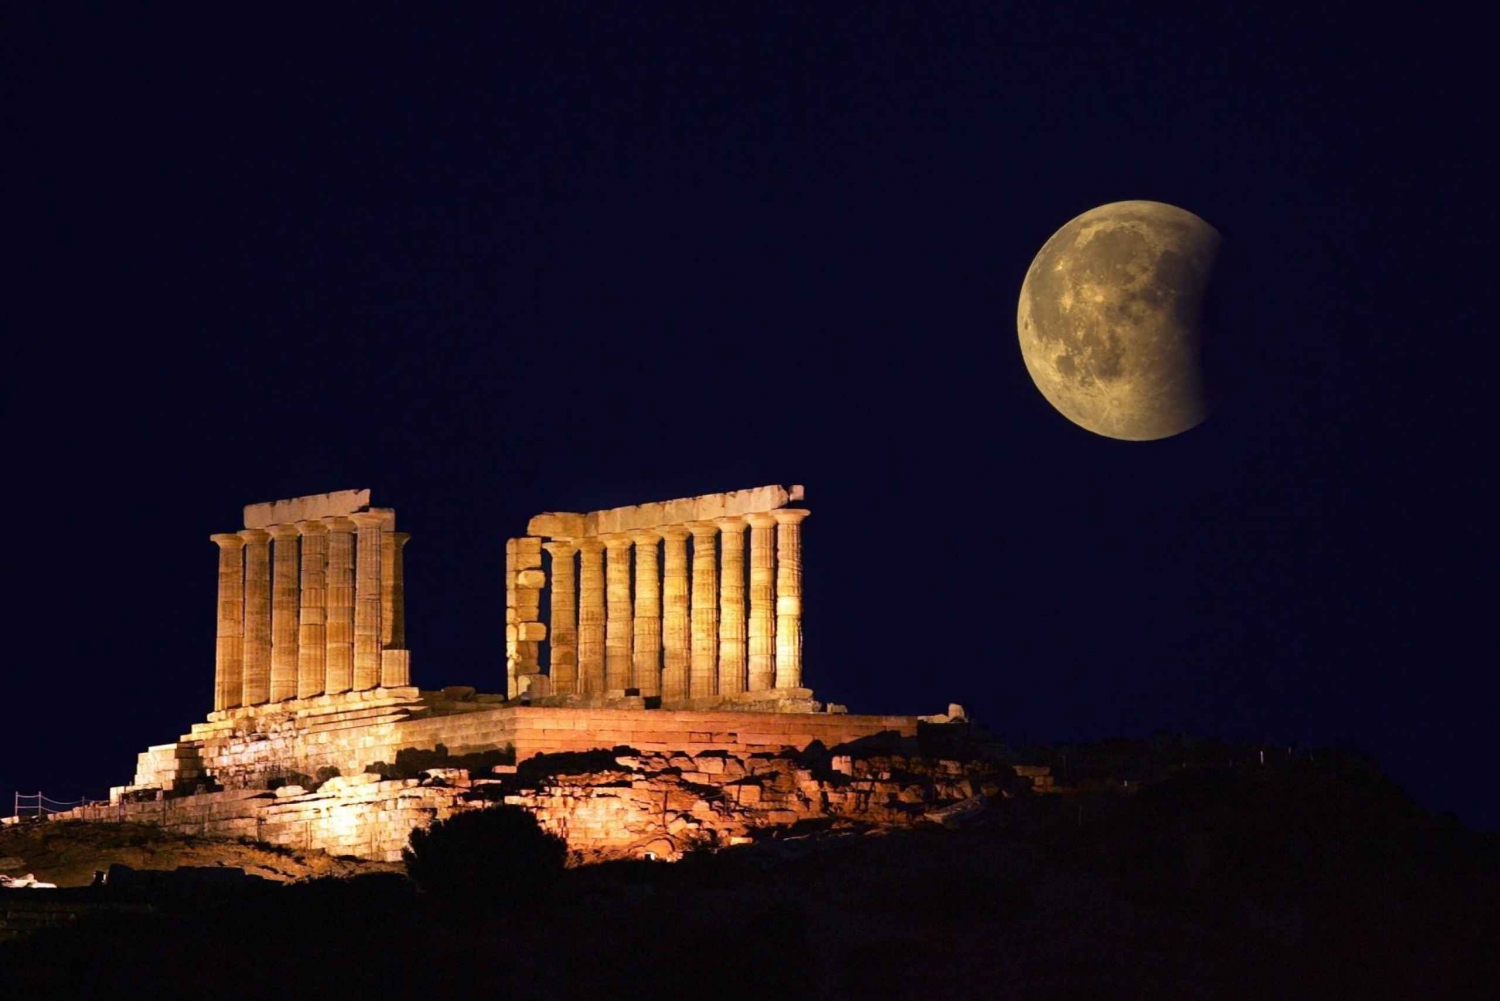 Athen til Sounio: Utforsk Poseidon-tempelet (4 timer)